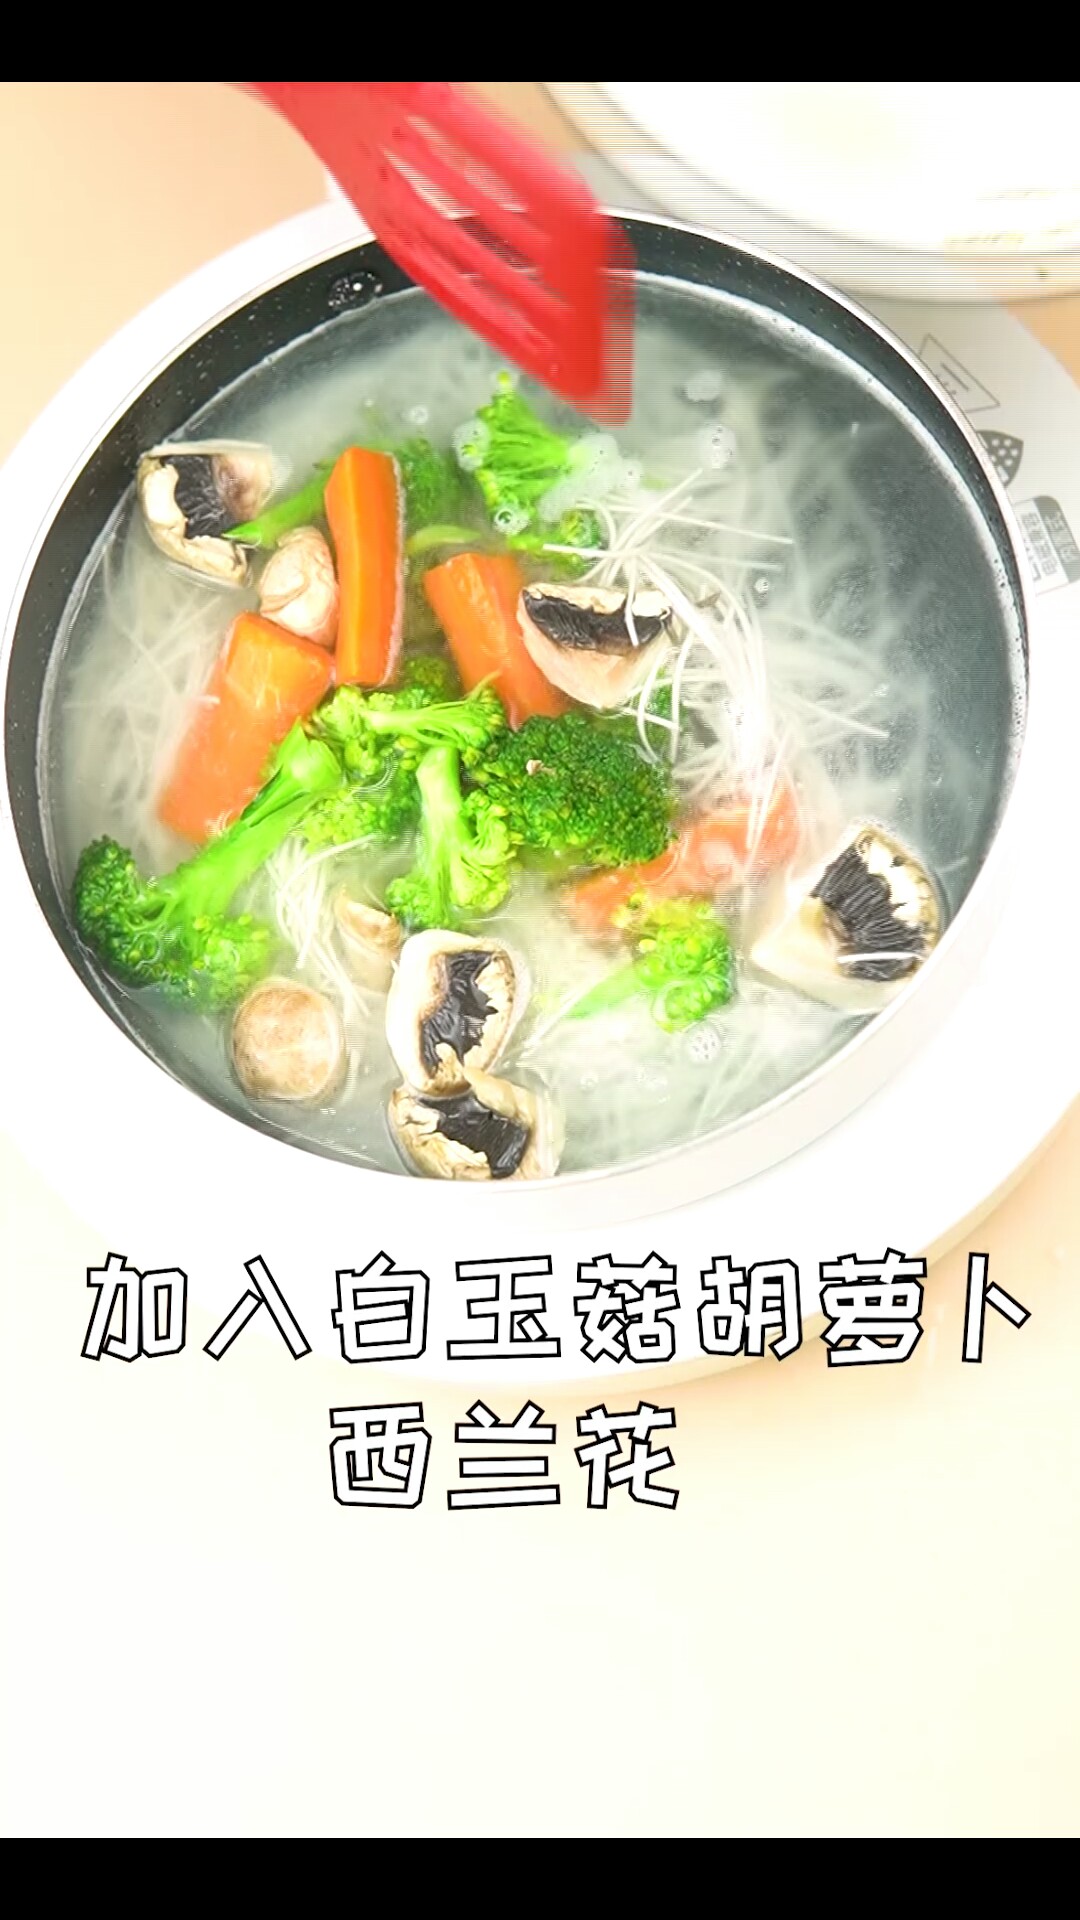 Baby Nutrition Seasonal Vegetable Noodles recipe